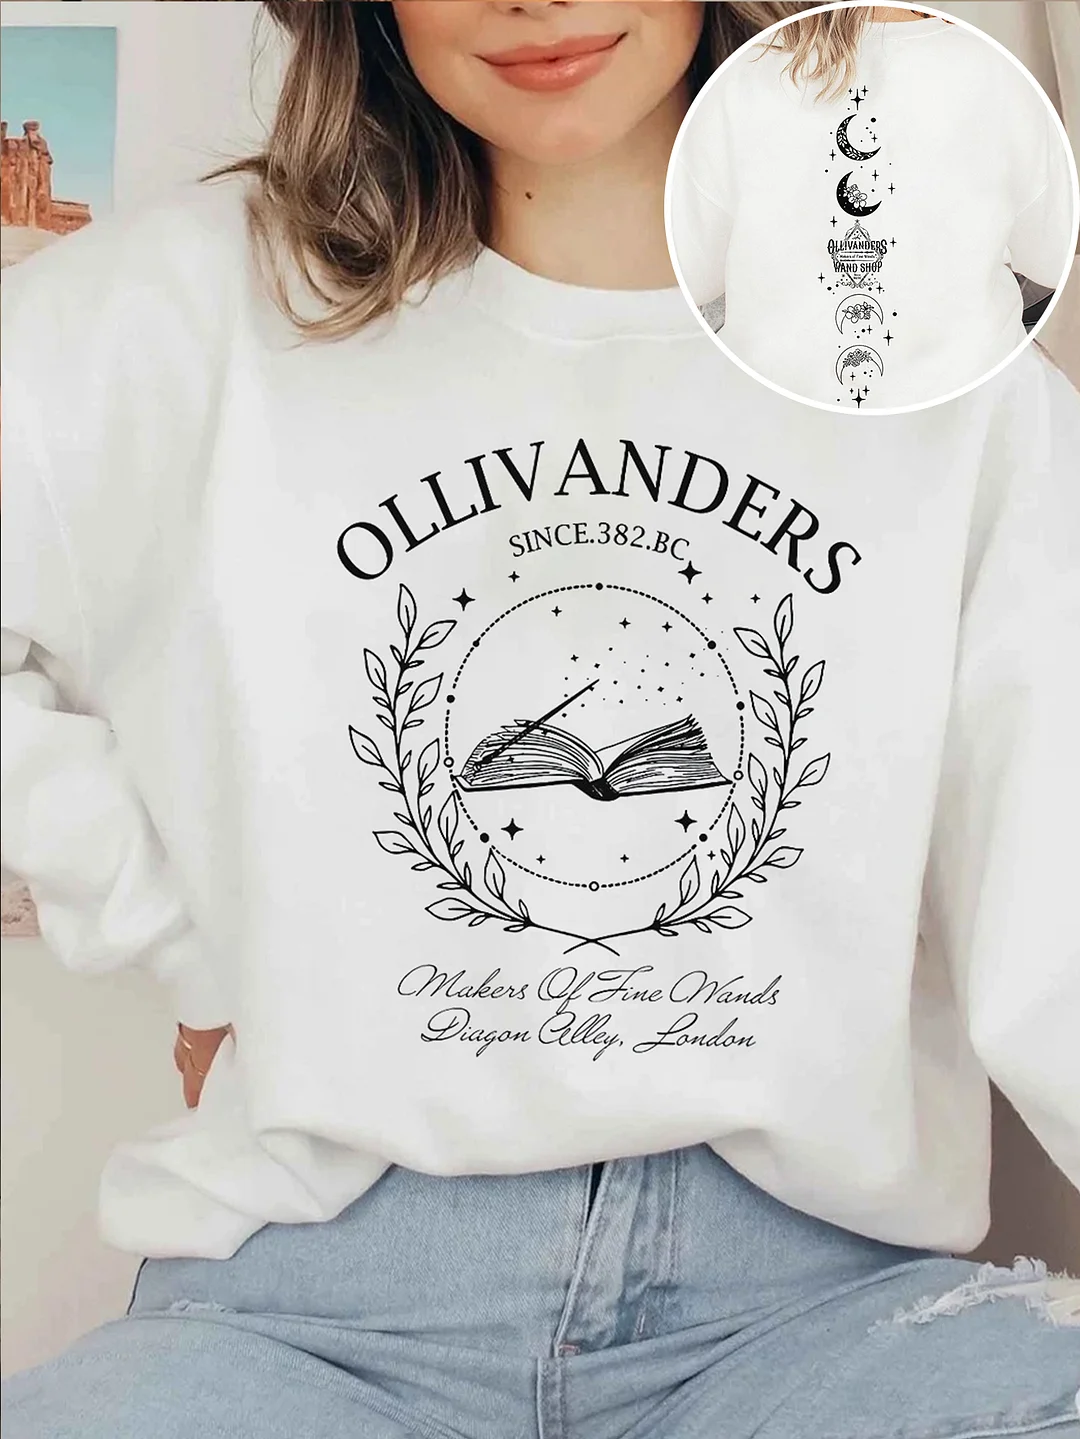 Ollivanders Wand Shop, Wizard Book Shop Sweatshirt / DarkAcademias /Darkacademias